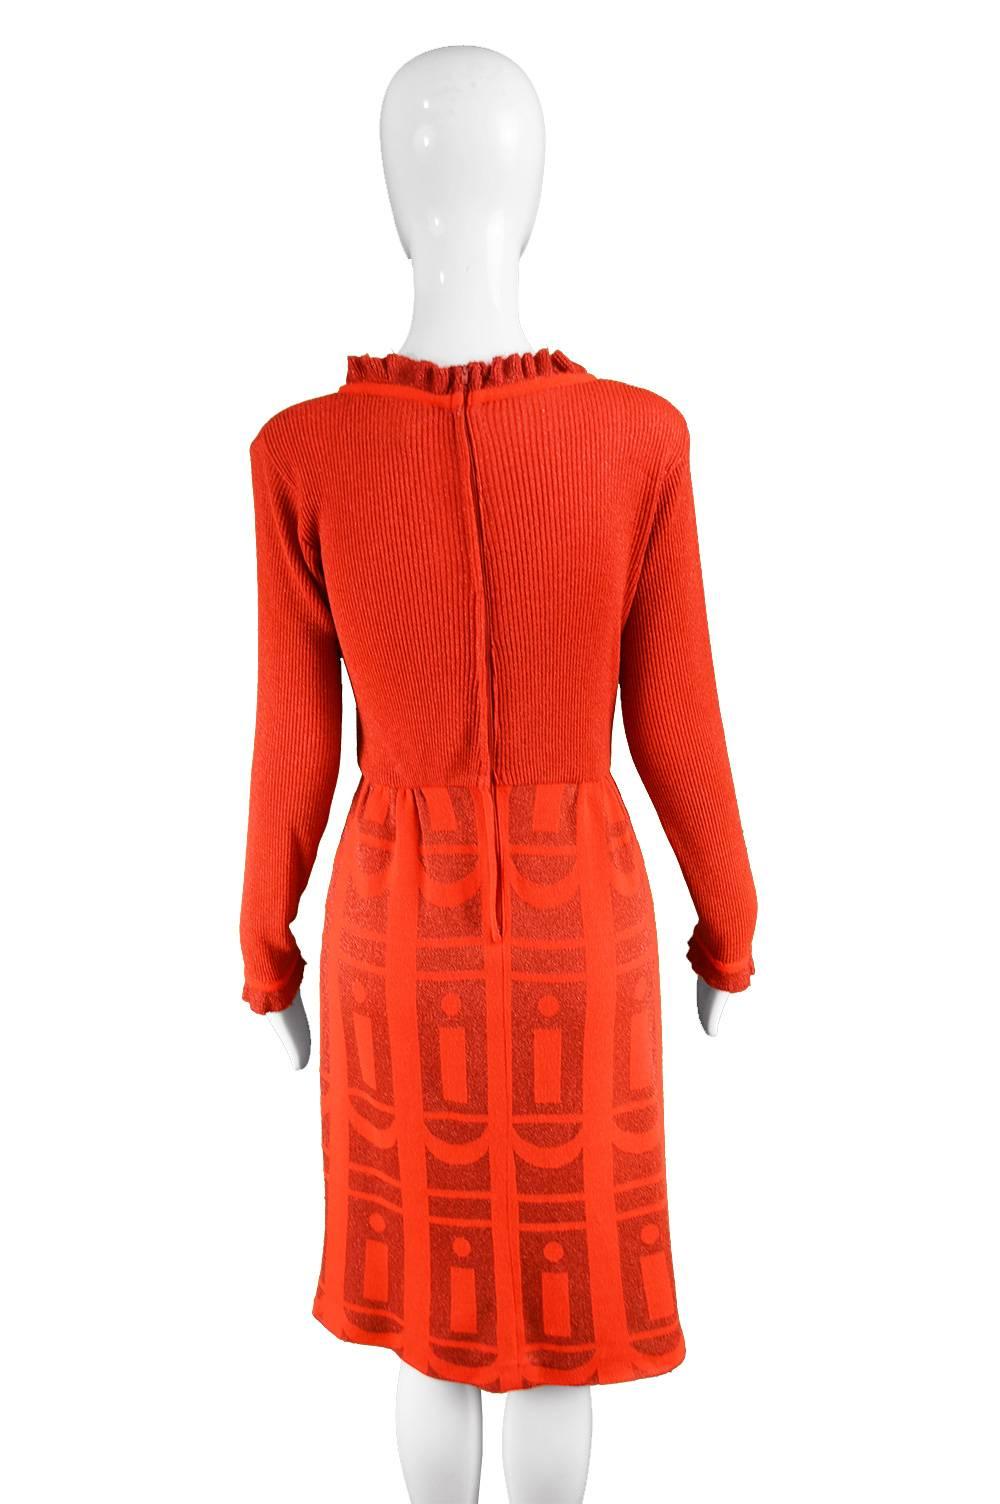 Louis Feraud 1970s Vintage Red Knit Dress For Sale 3